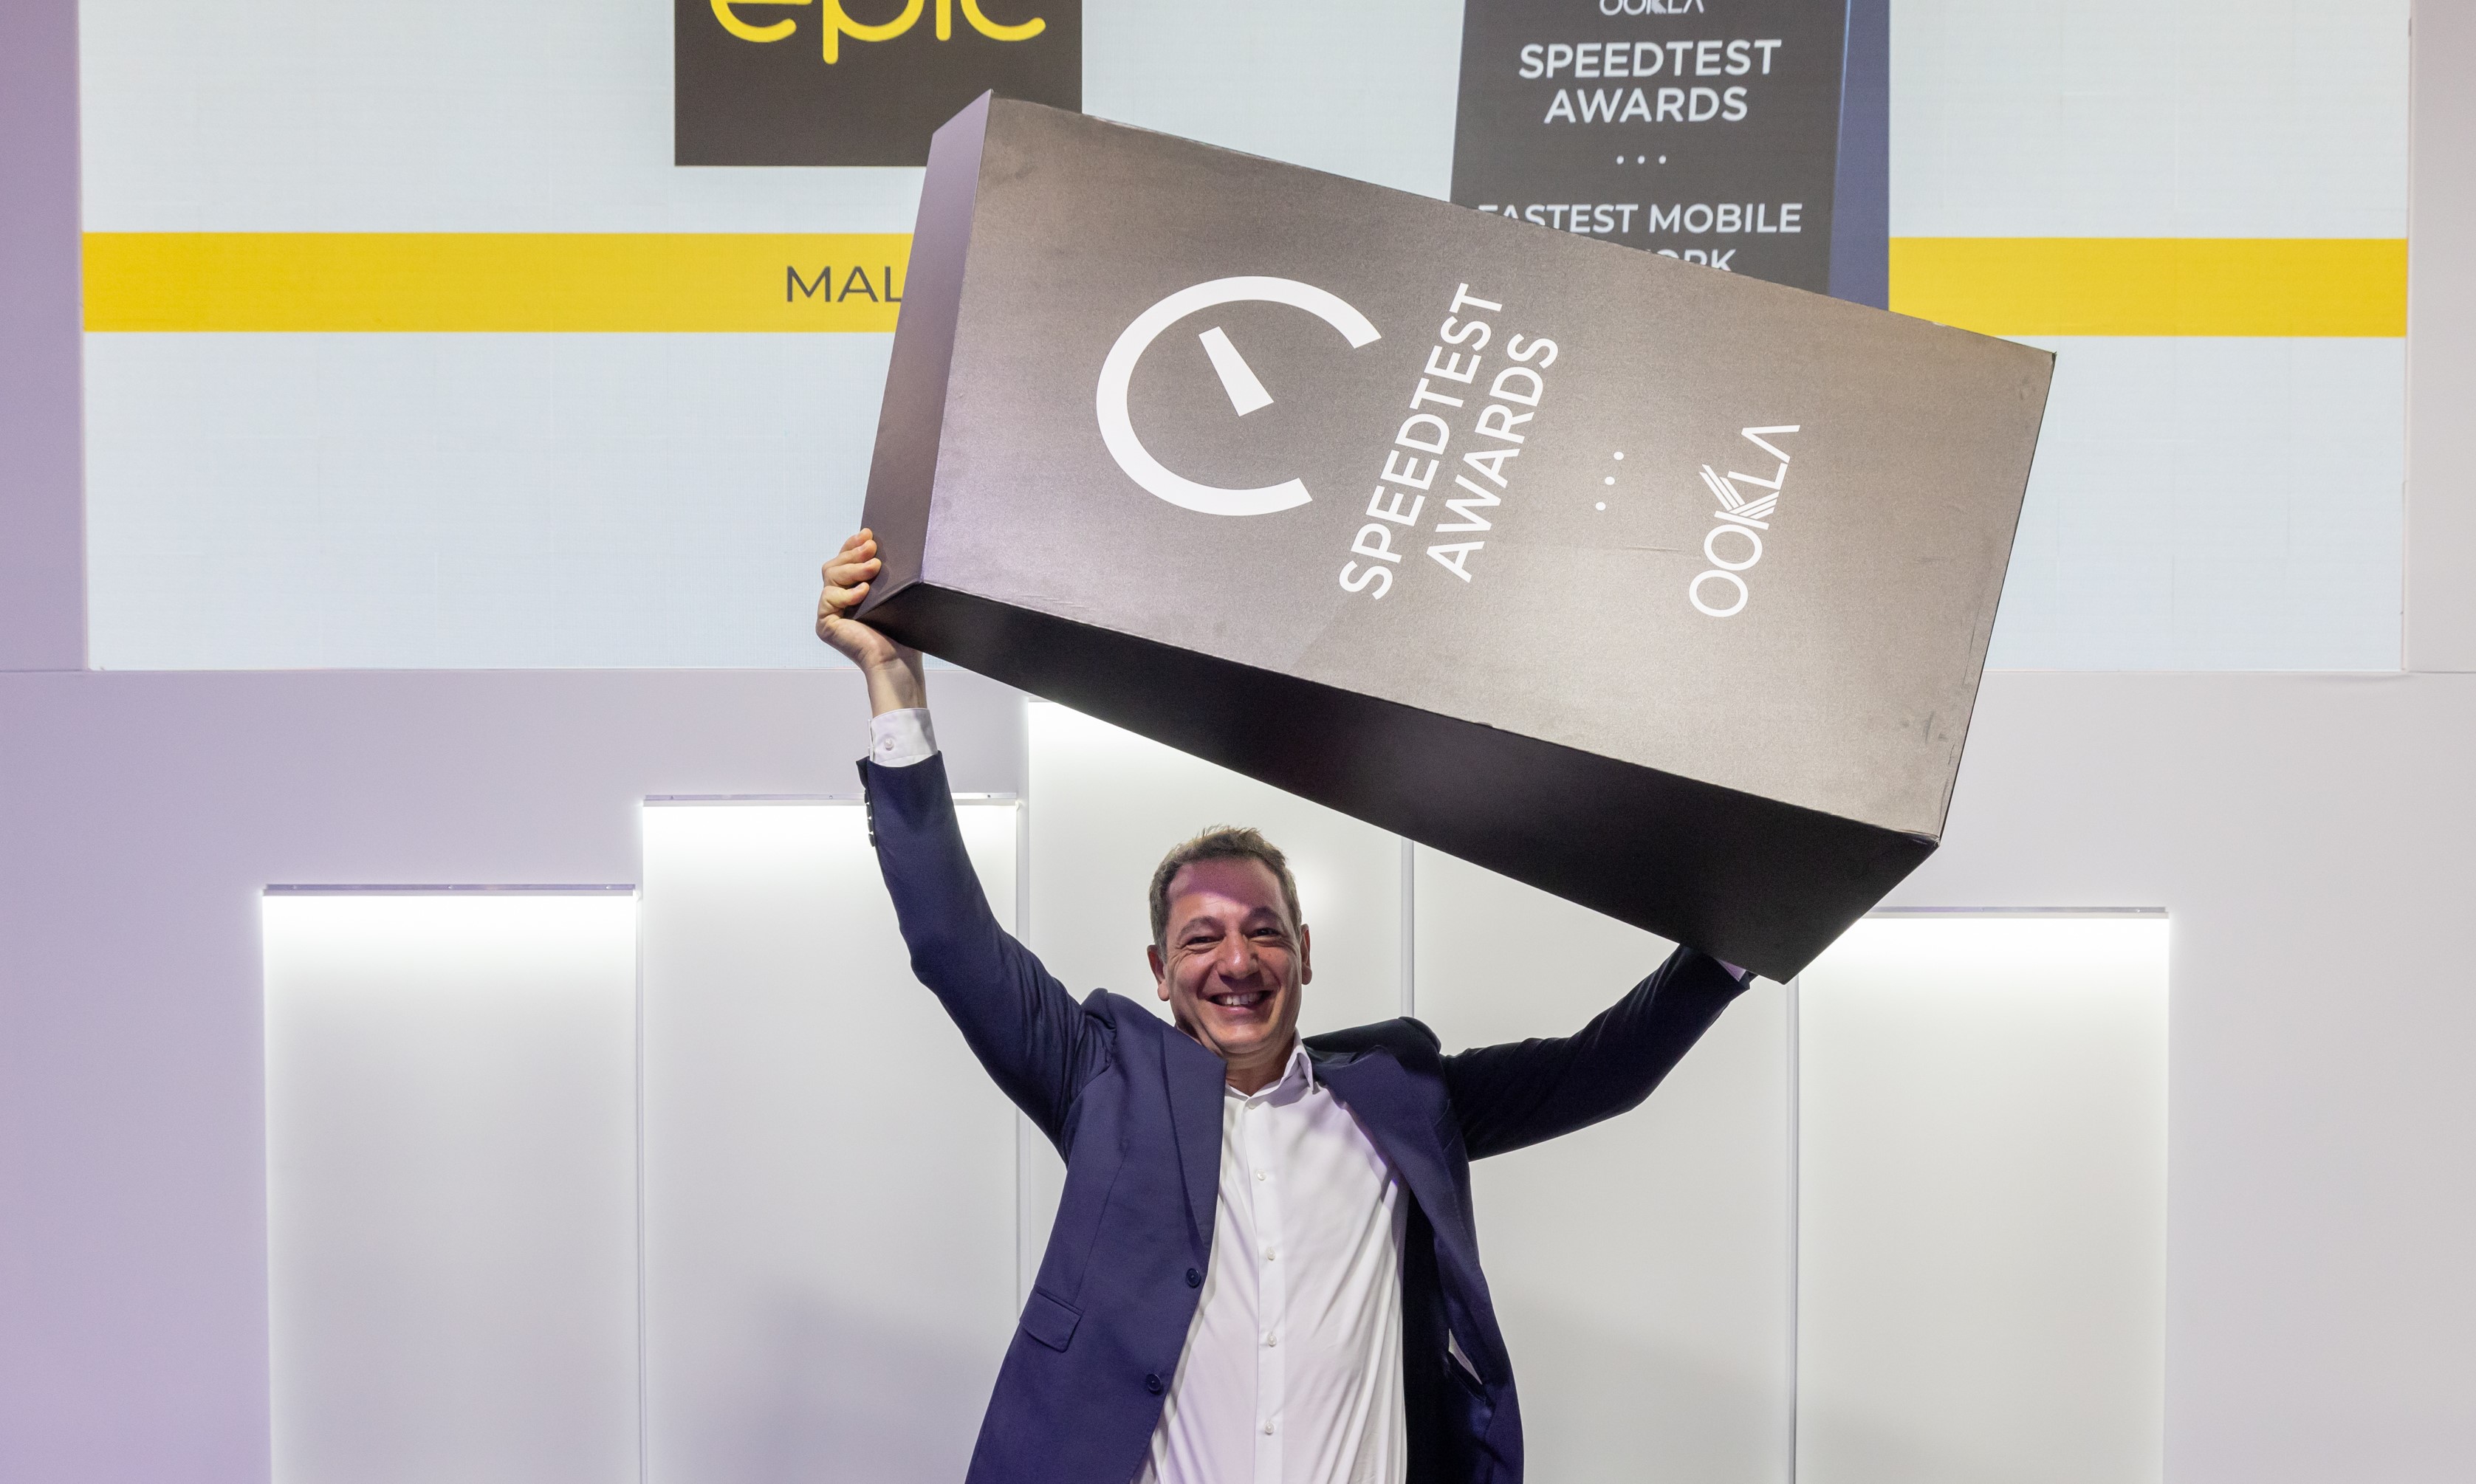 Epic picks up prestigious Ookla Speedtest Award at Mobile World Congress